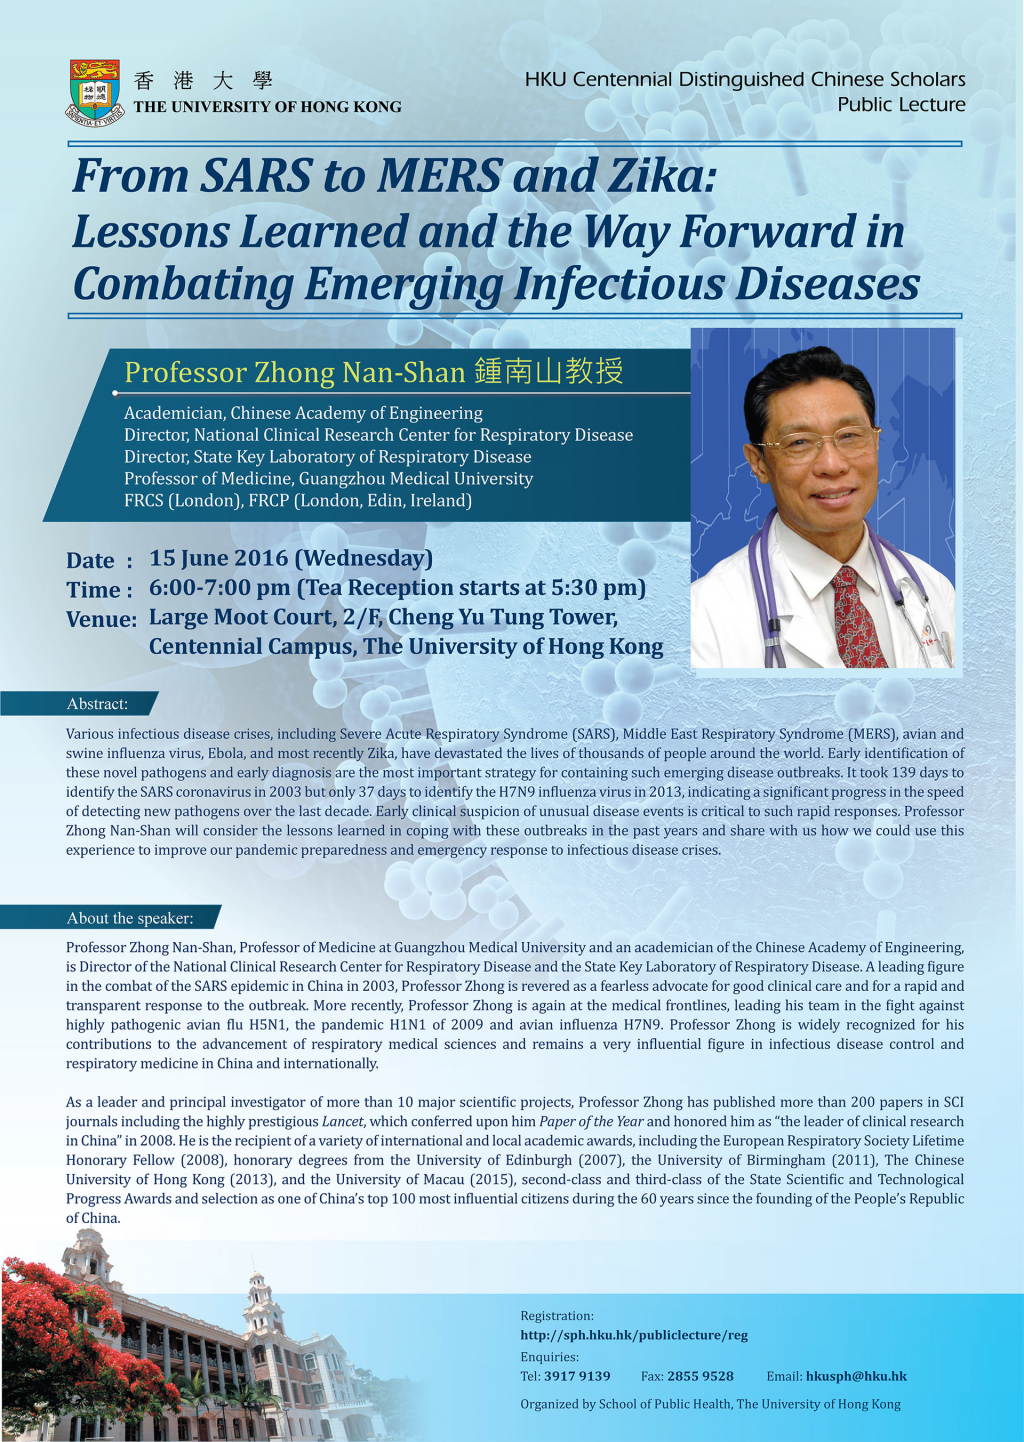 Public Lecture by Professor Zhong Nan-Shan on Emerging Infectious Diseases